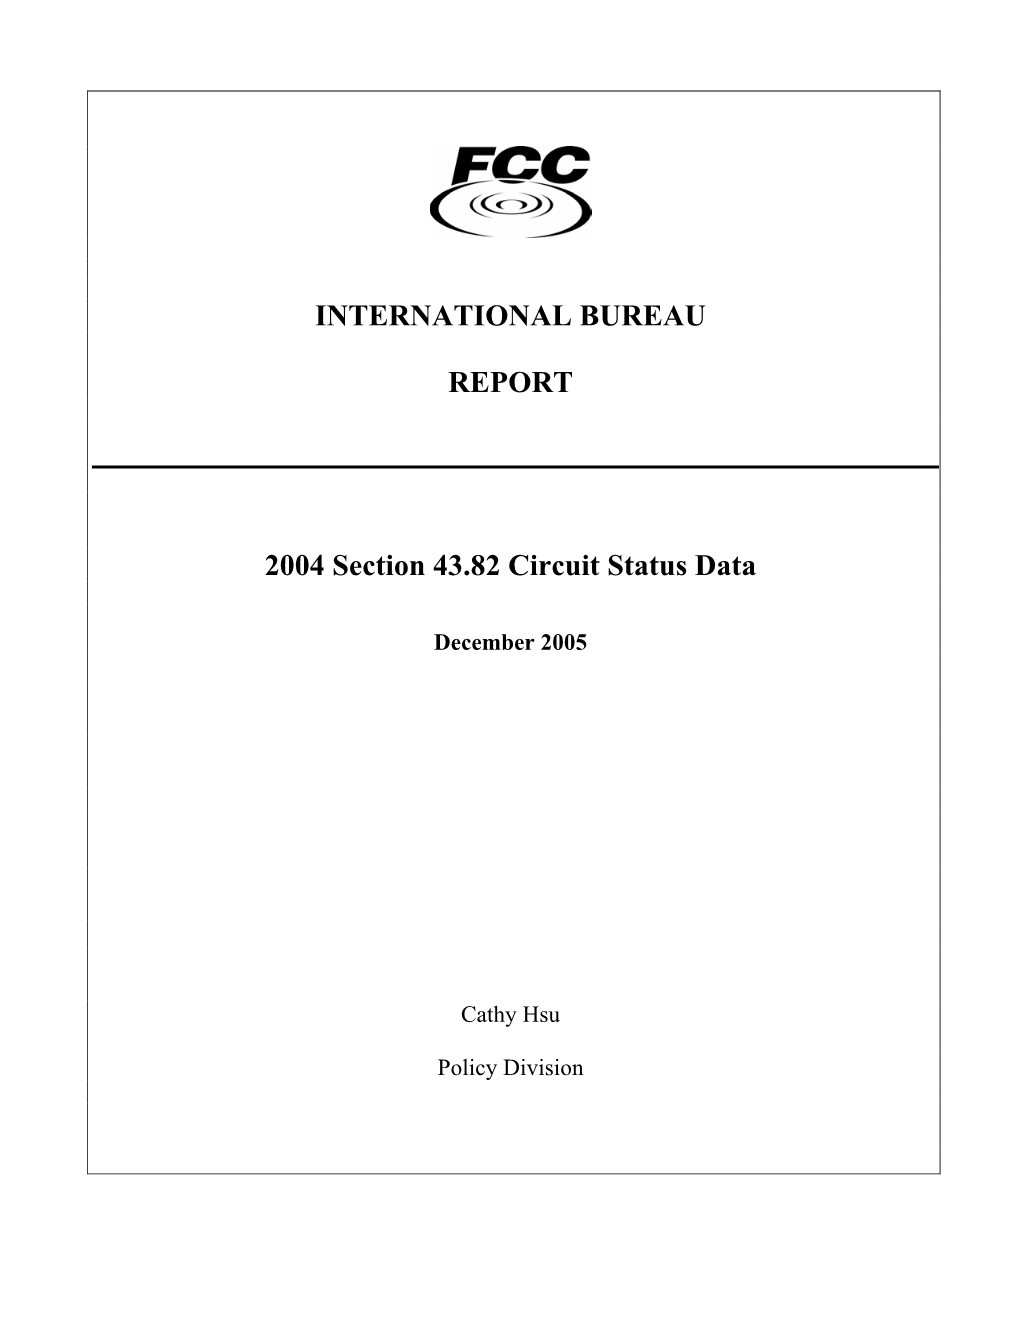 INTERNATIONAL BUREAU REPORT 2004 Section 43.82 Circuit Status